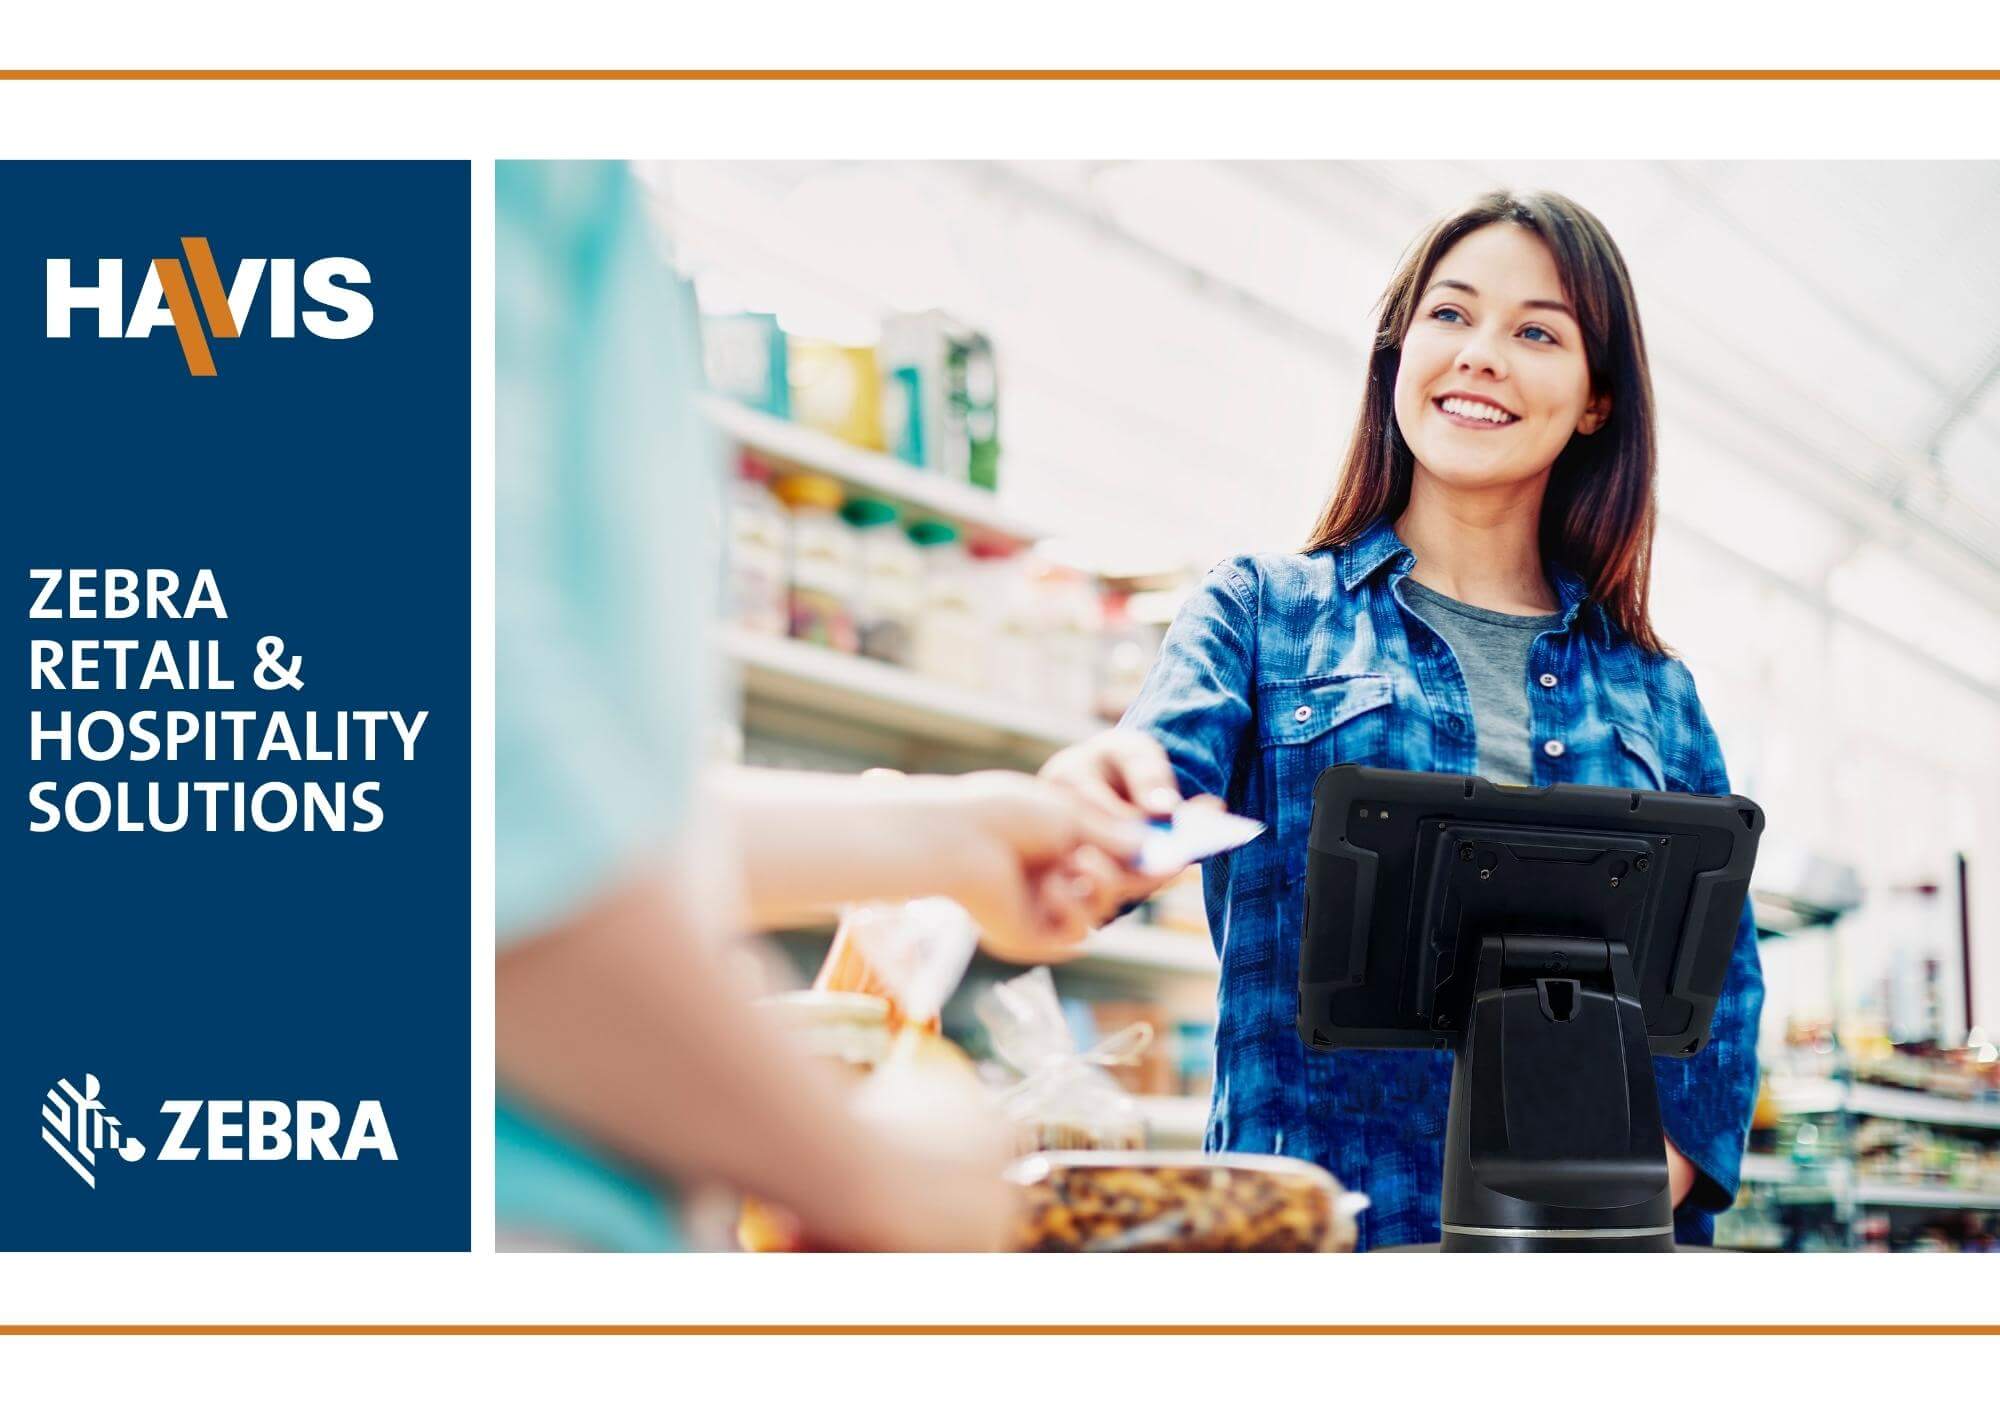 Zebra Retail & Hospitality Solutions Brochure